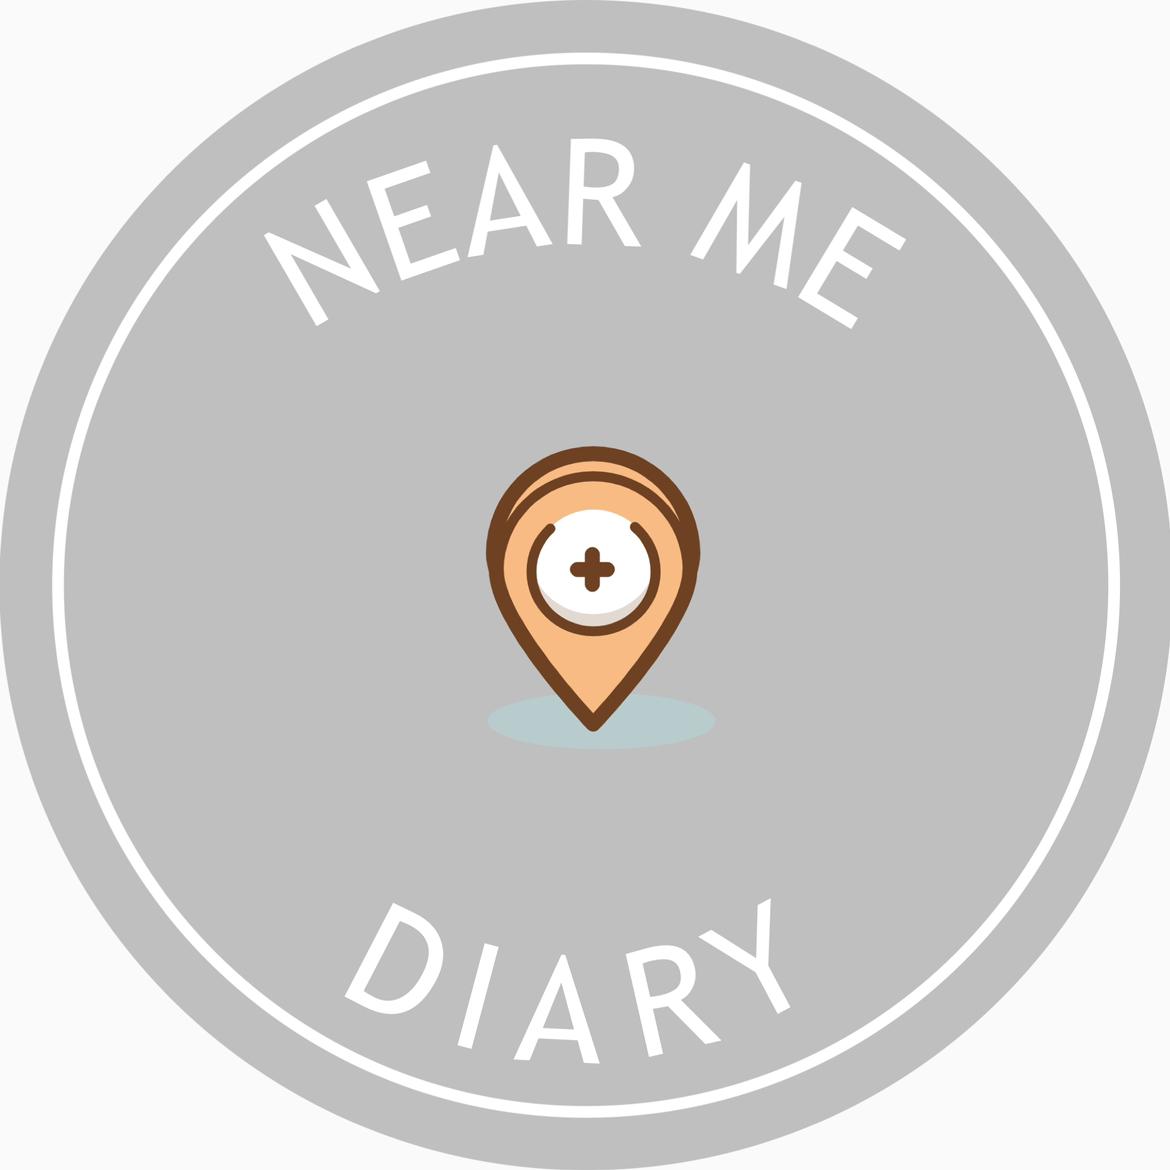 Near Me Diary